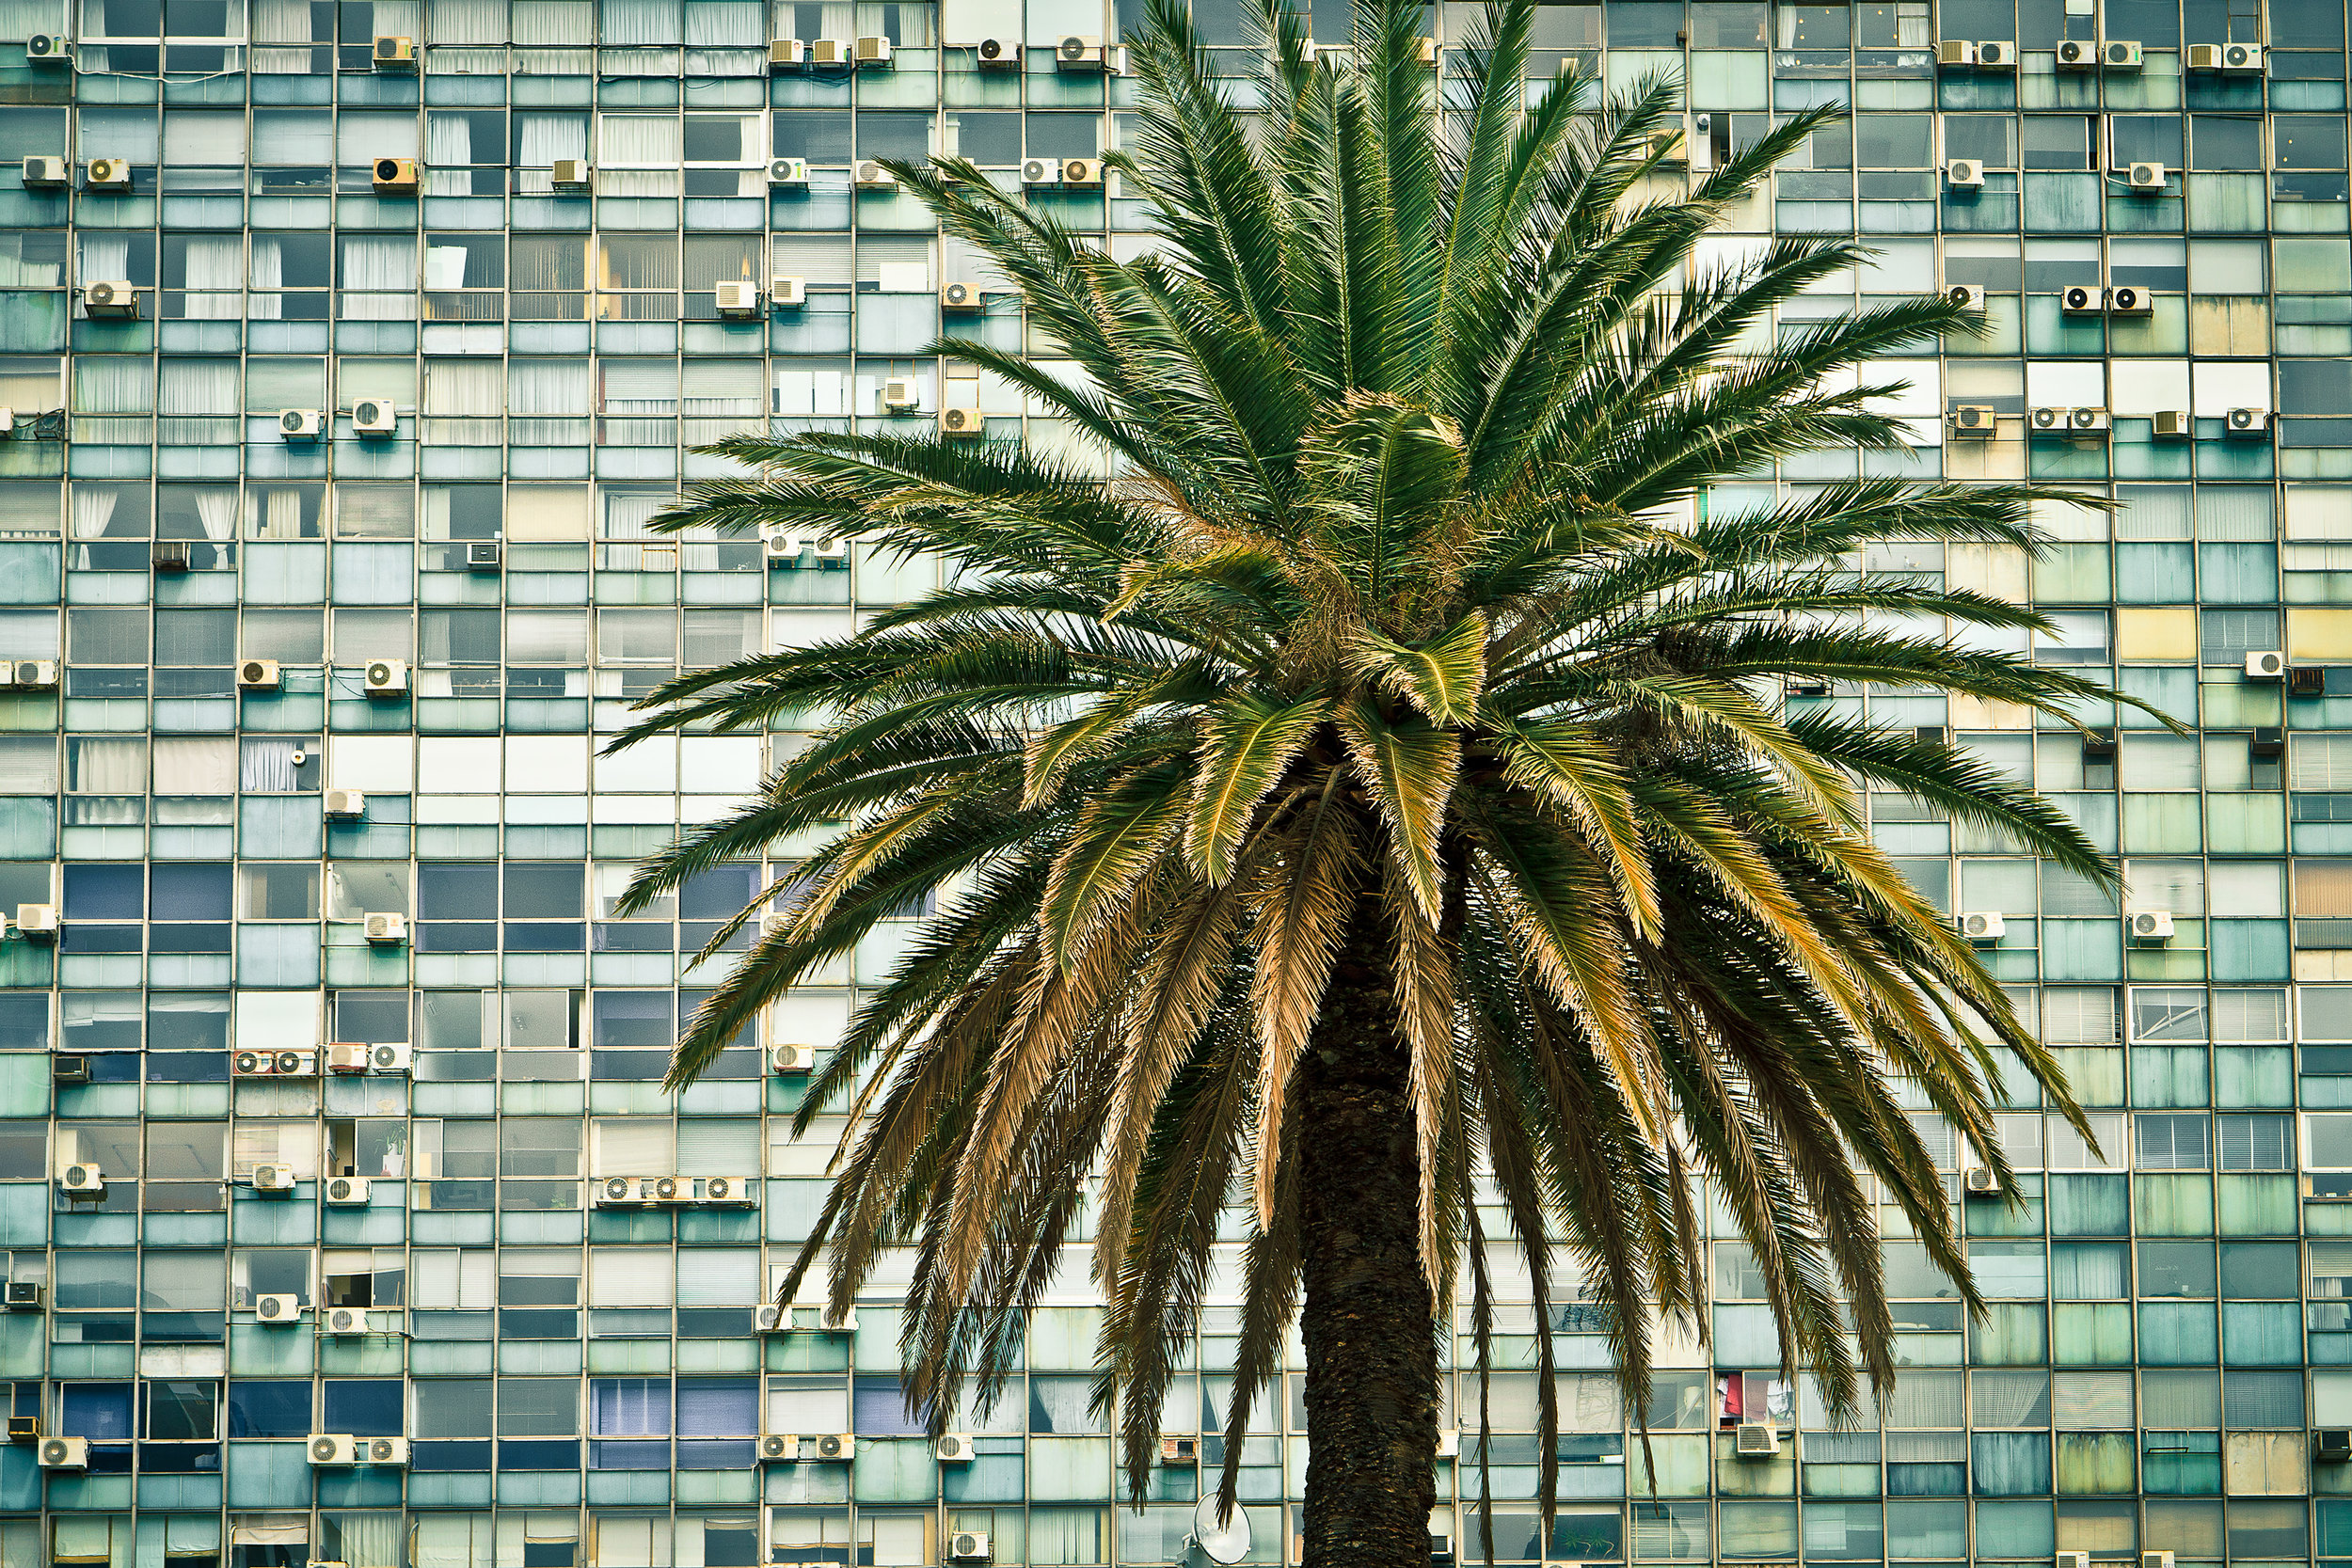  Montevideo. November, 2010 